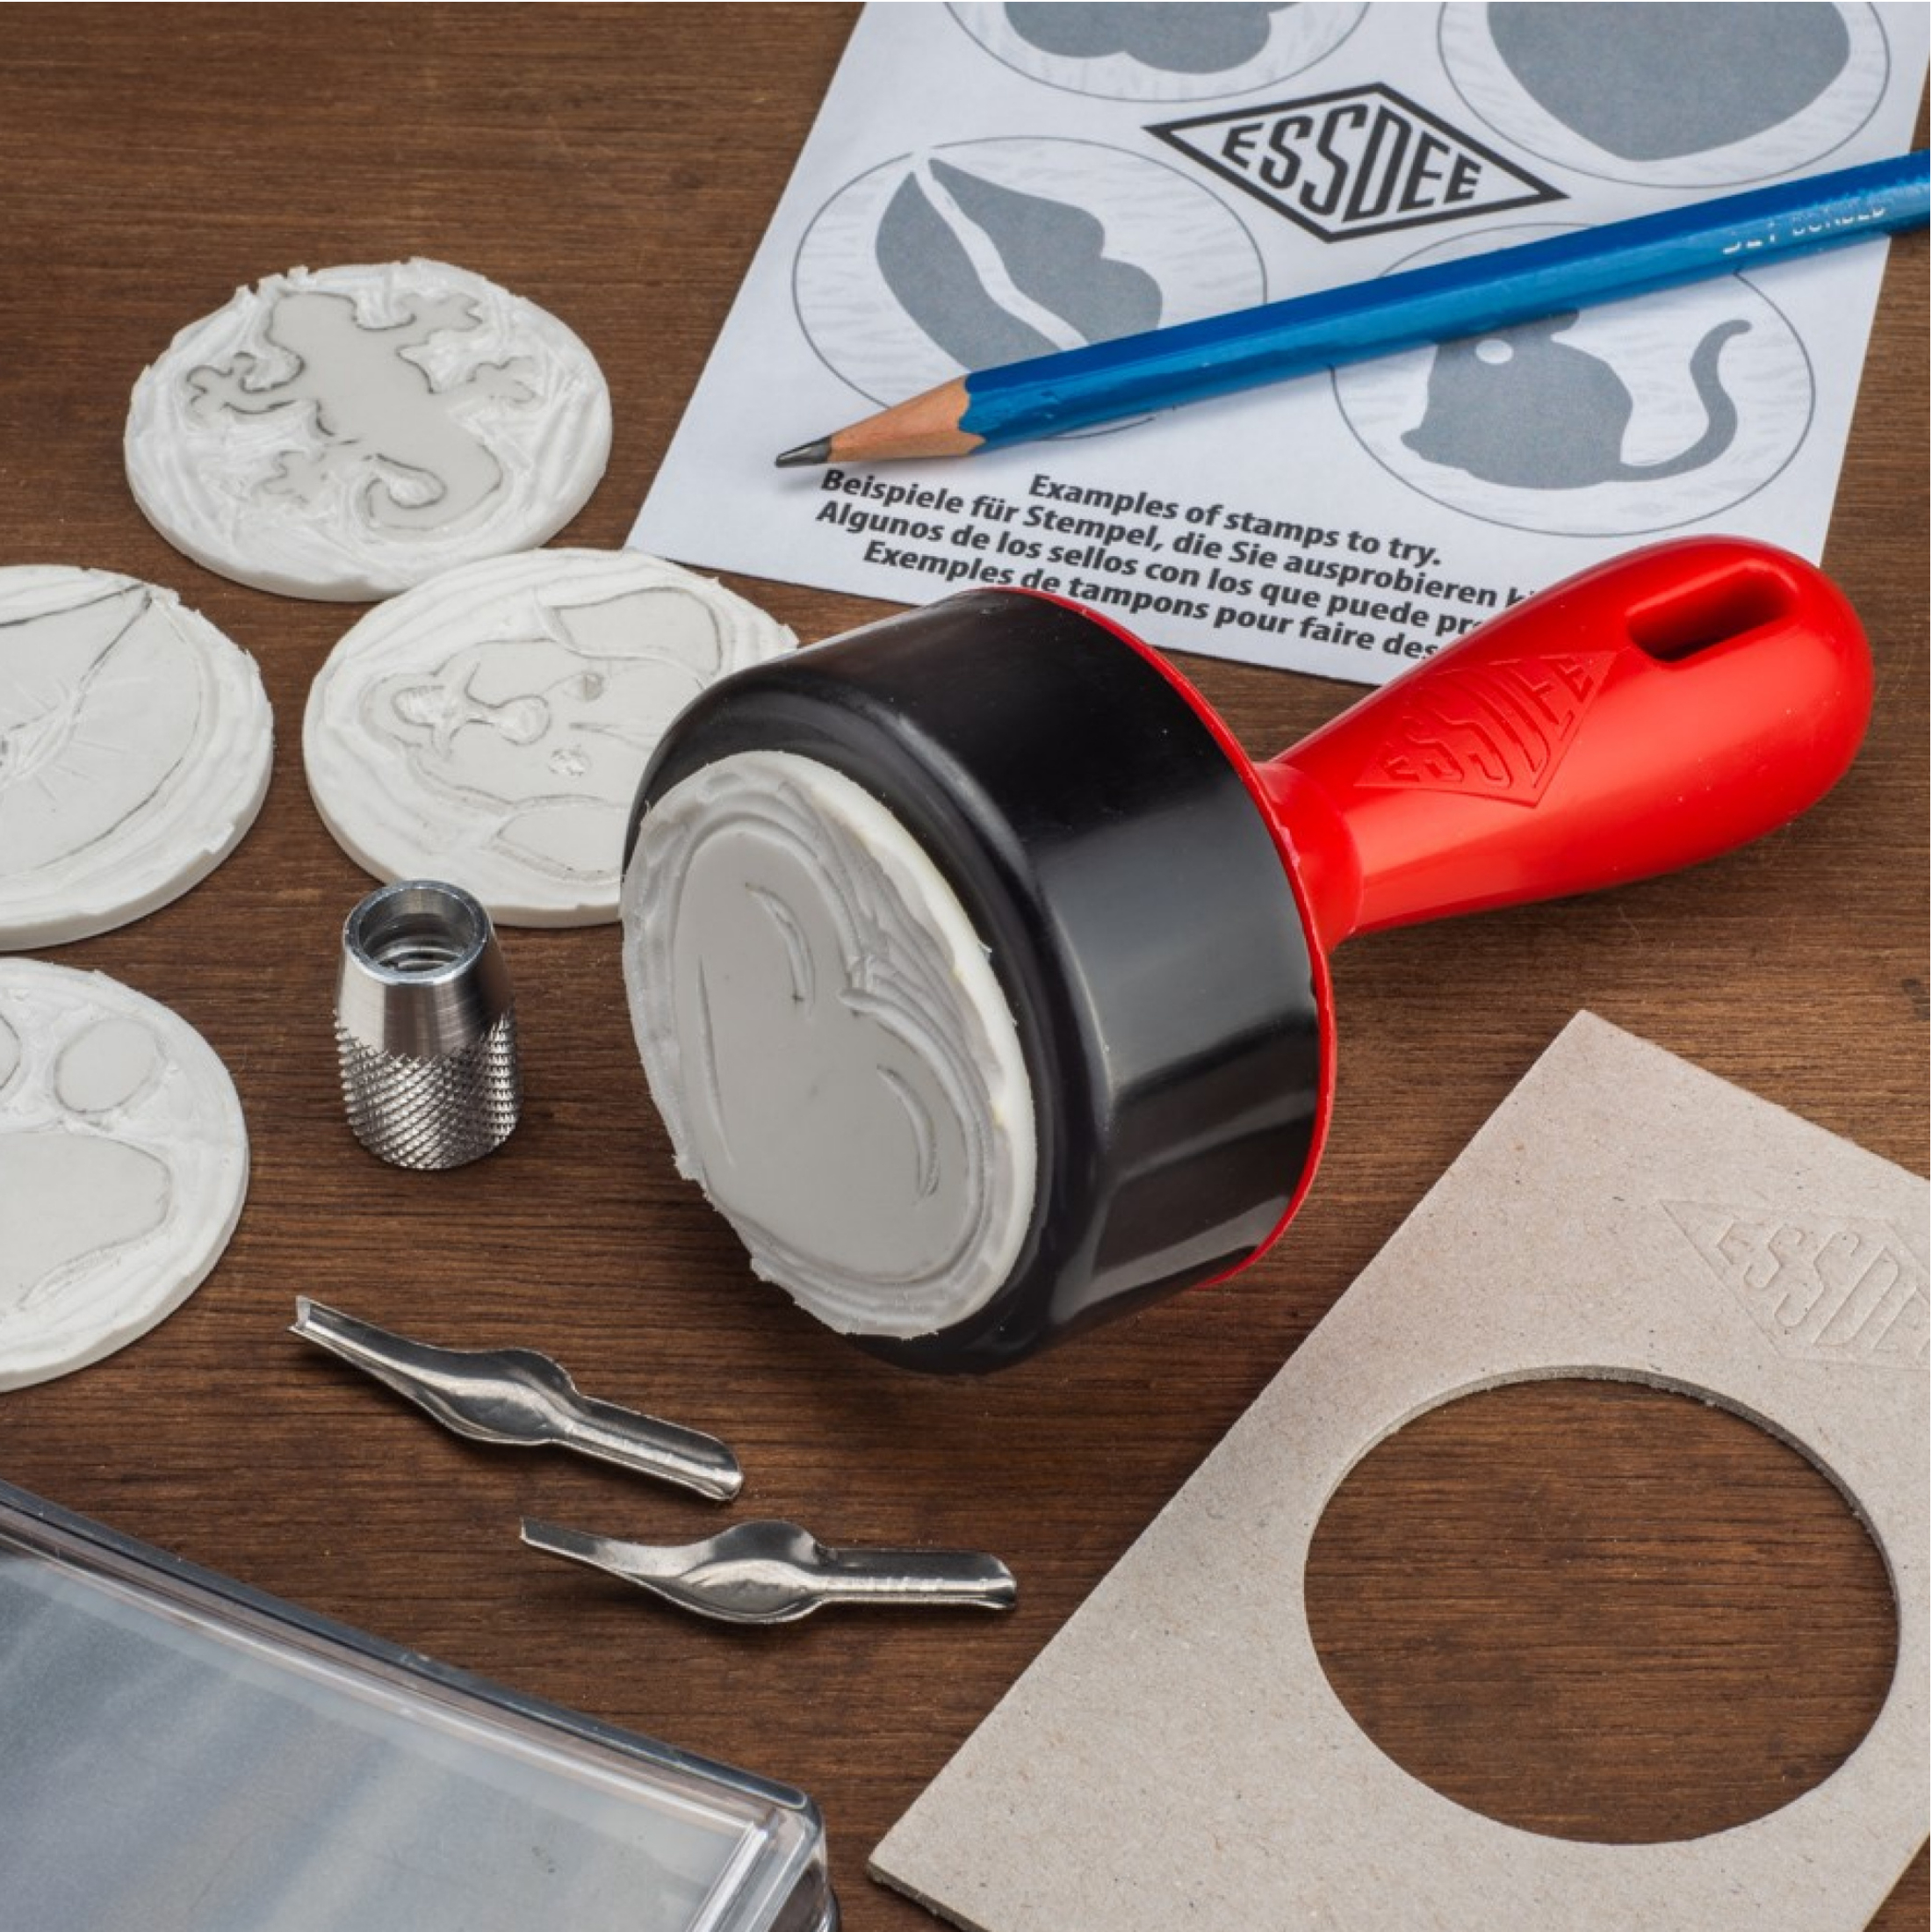 Essdee MasterCut Stamp Carving Kit